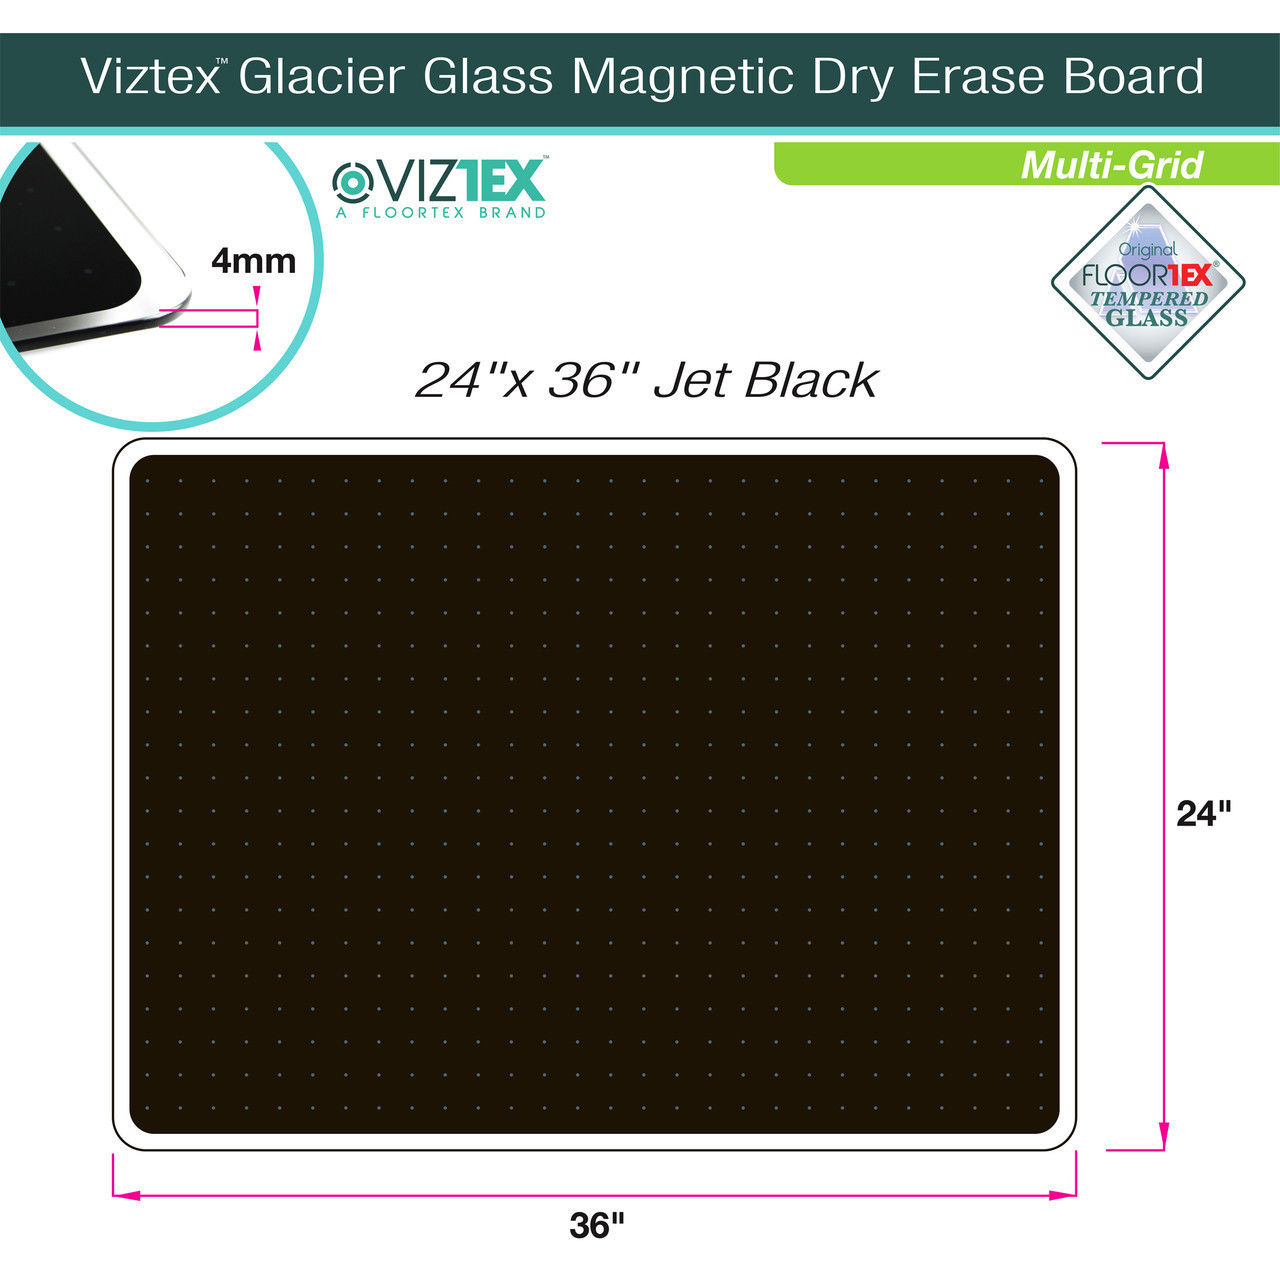 Viztex Glacier Magnetic Glass Dry Erase Multi-Purpose Grid, Black